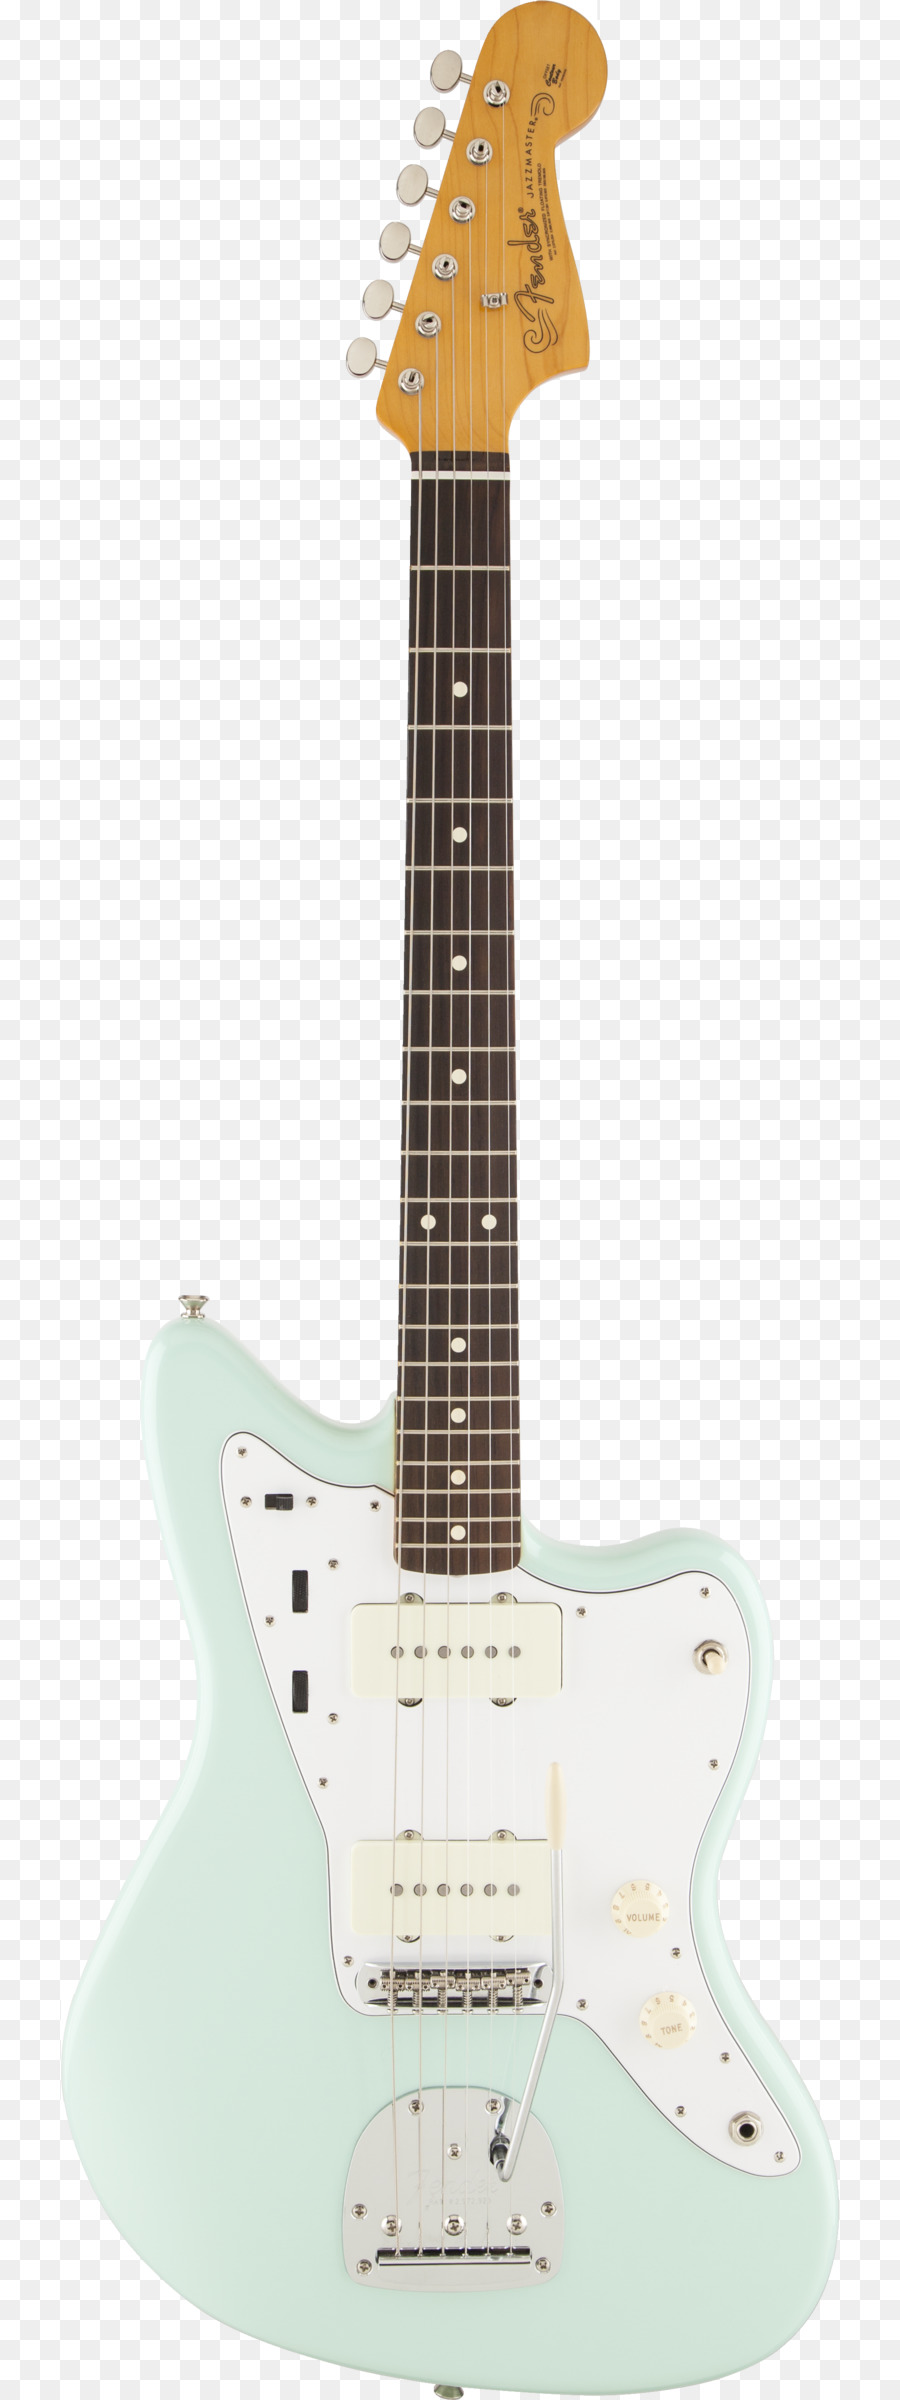 Akustik Elektro Gitarre Fender Jaguar, Fender Musical Instruments Corporation - E Gitarre